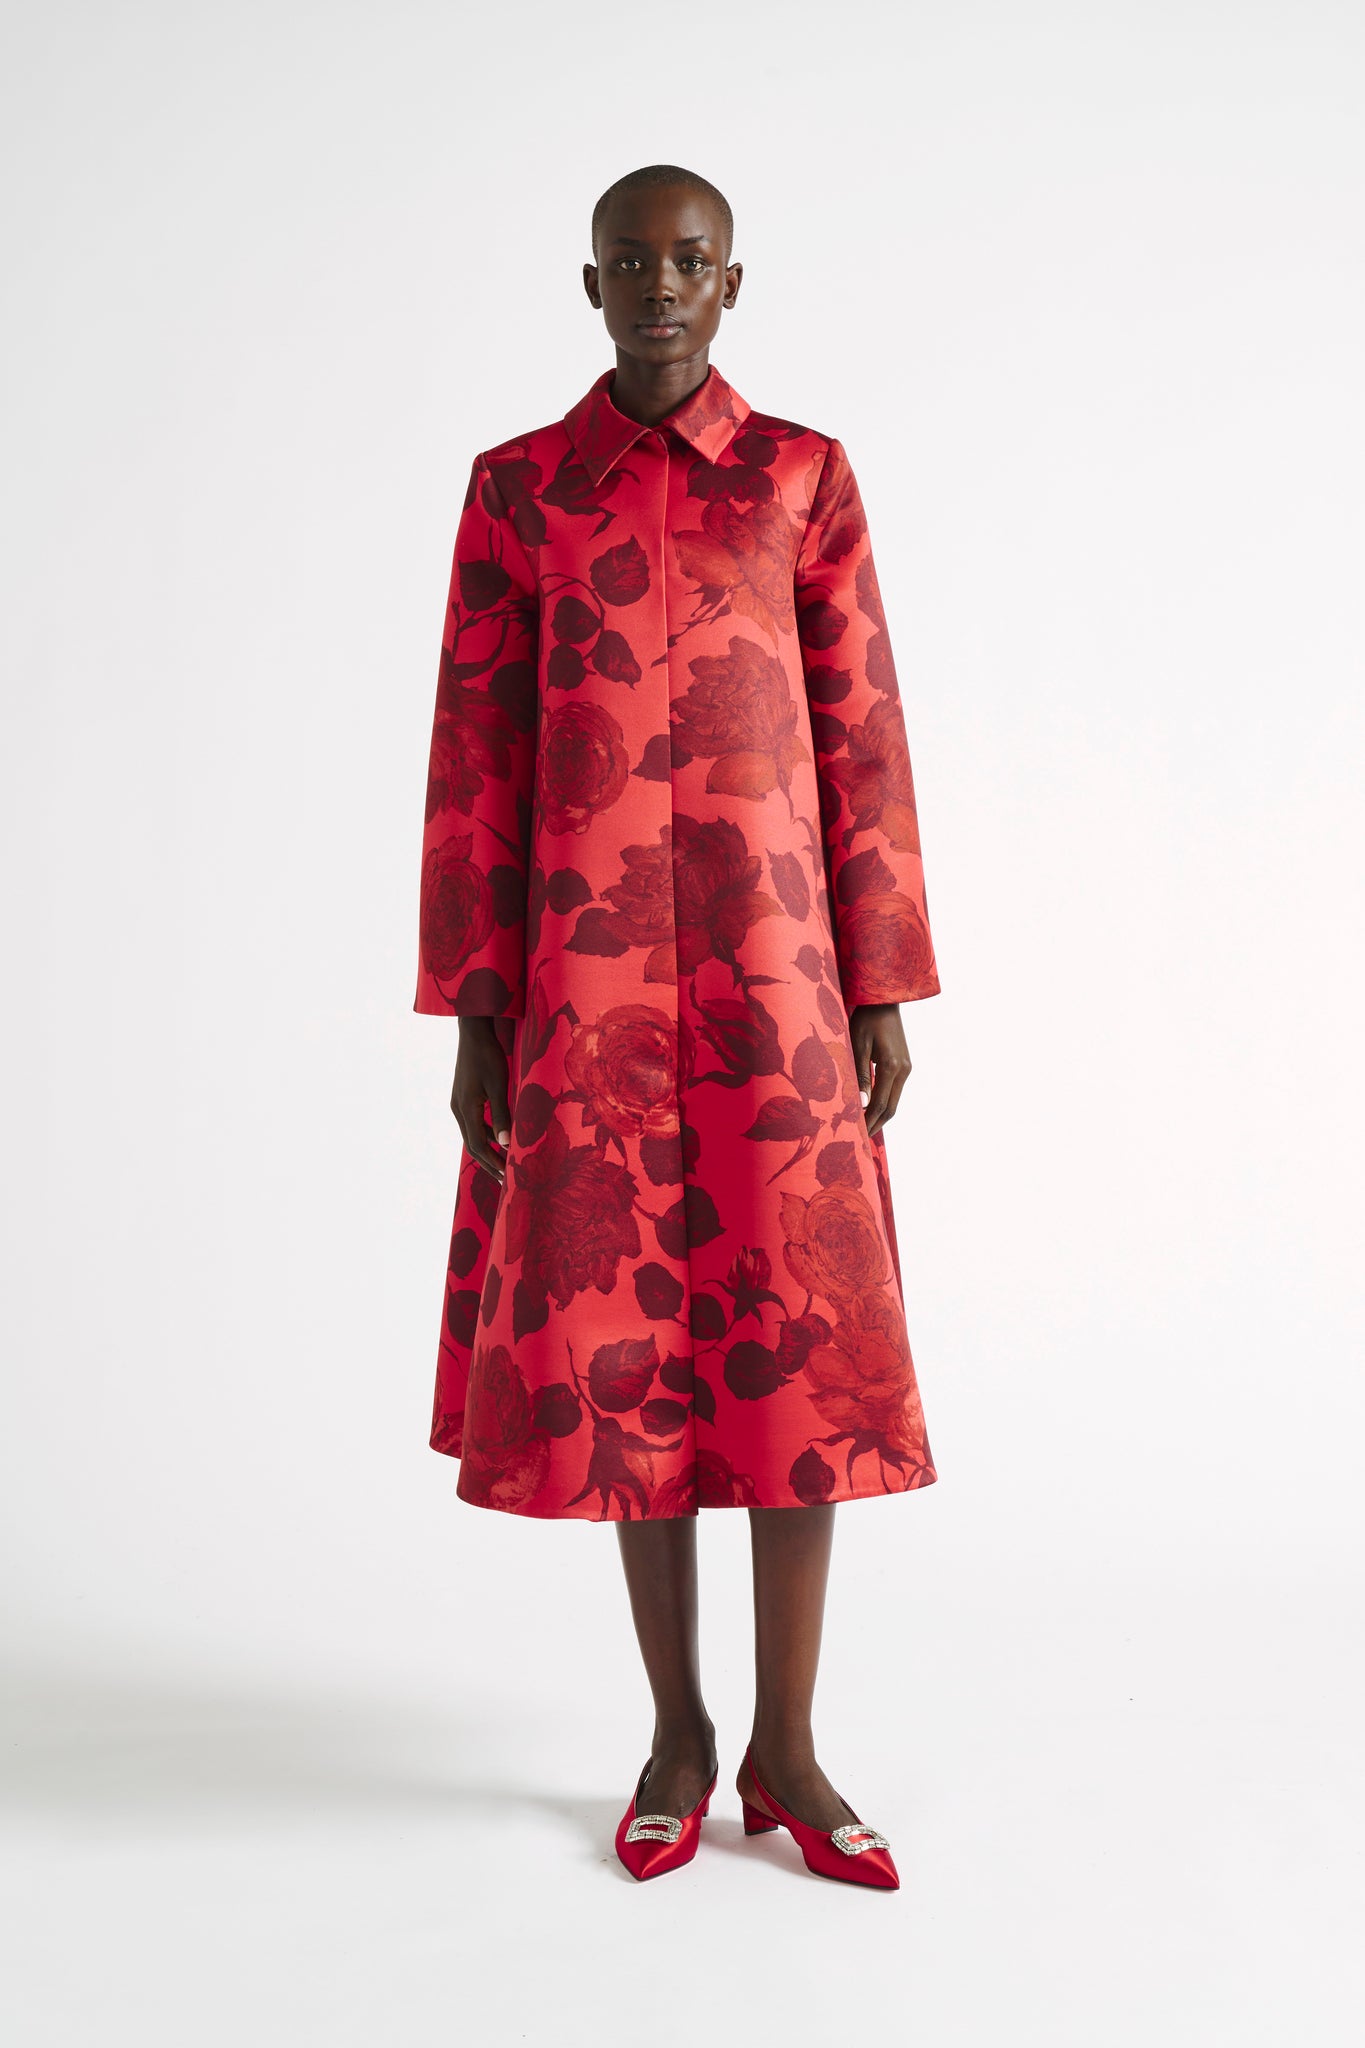 Ellis Coat | Red Rose Printed Coat Dress | Emilia Wickstead